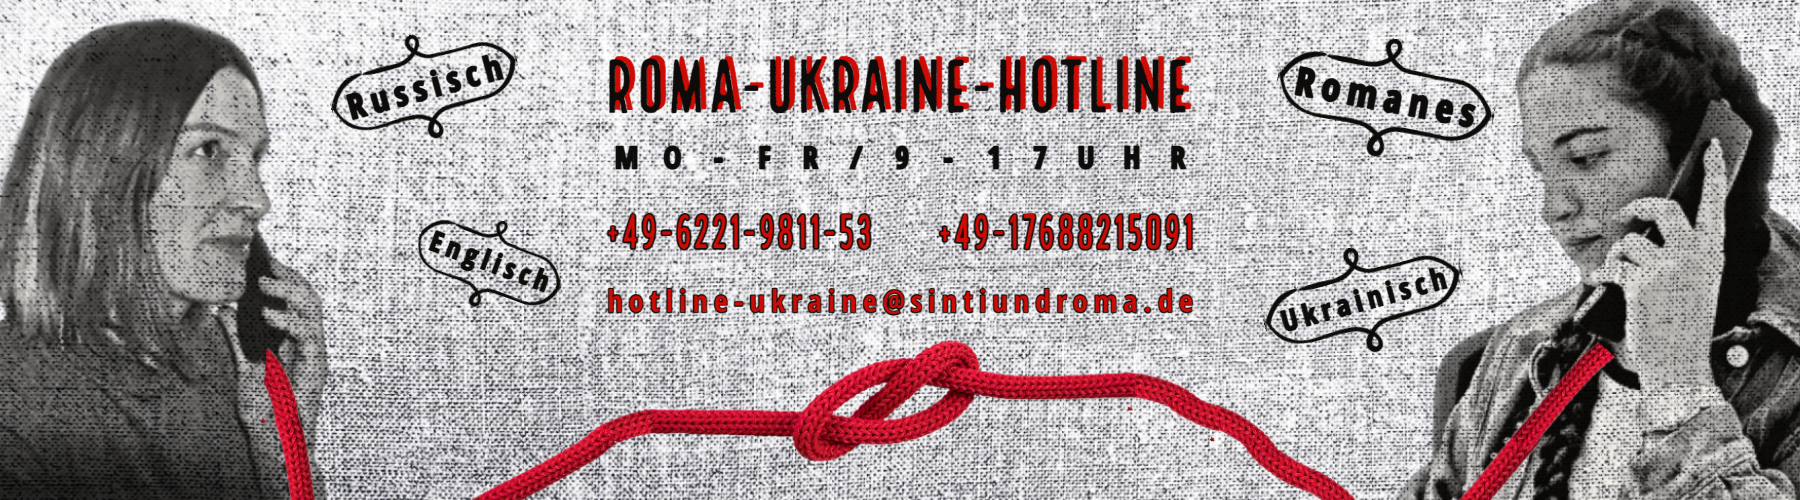 Roma-Ukraine Hotline; Monday to Friday, 9 a.m. to 5 p.m. Phone: +49 6221 981153, +49 176 88215091, hotline-ukraine@sintiundroma.de; Russian, Romany, English, Ukrainian